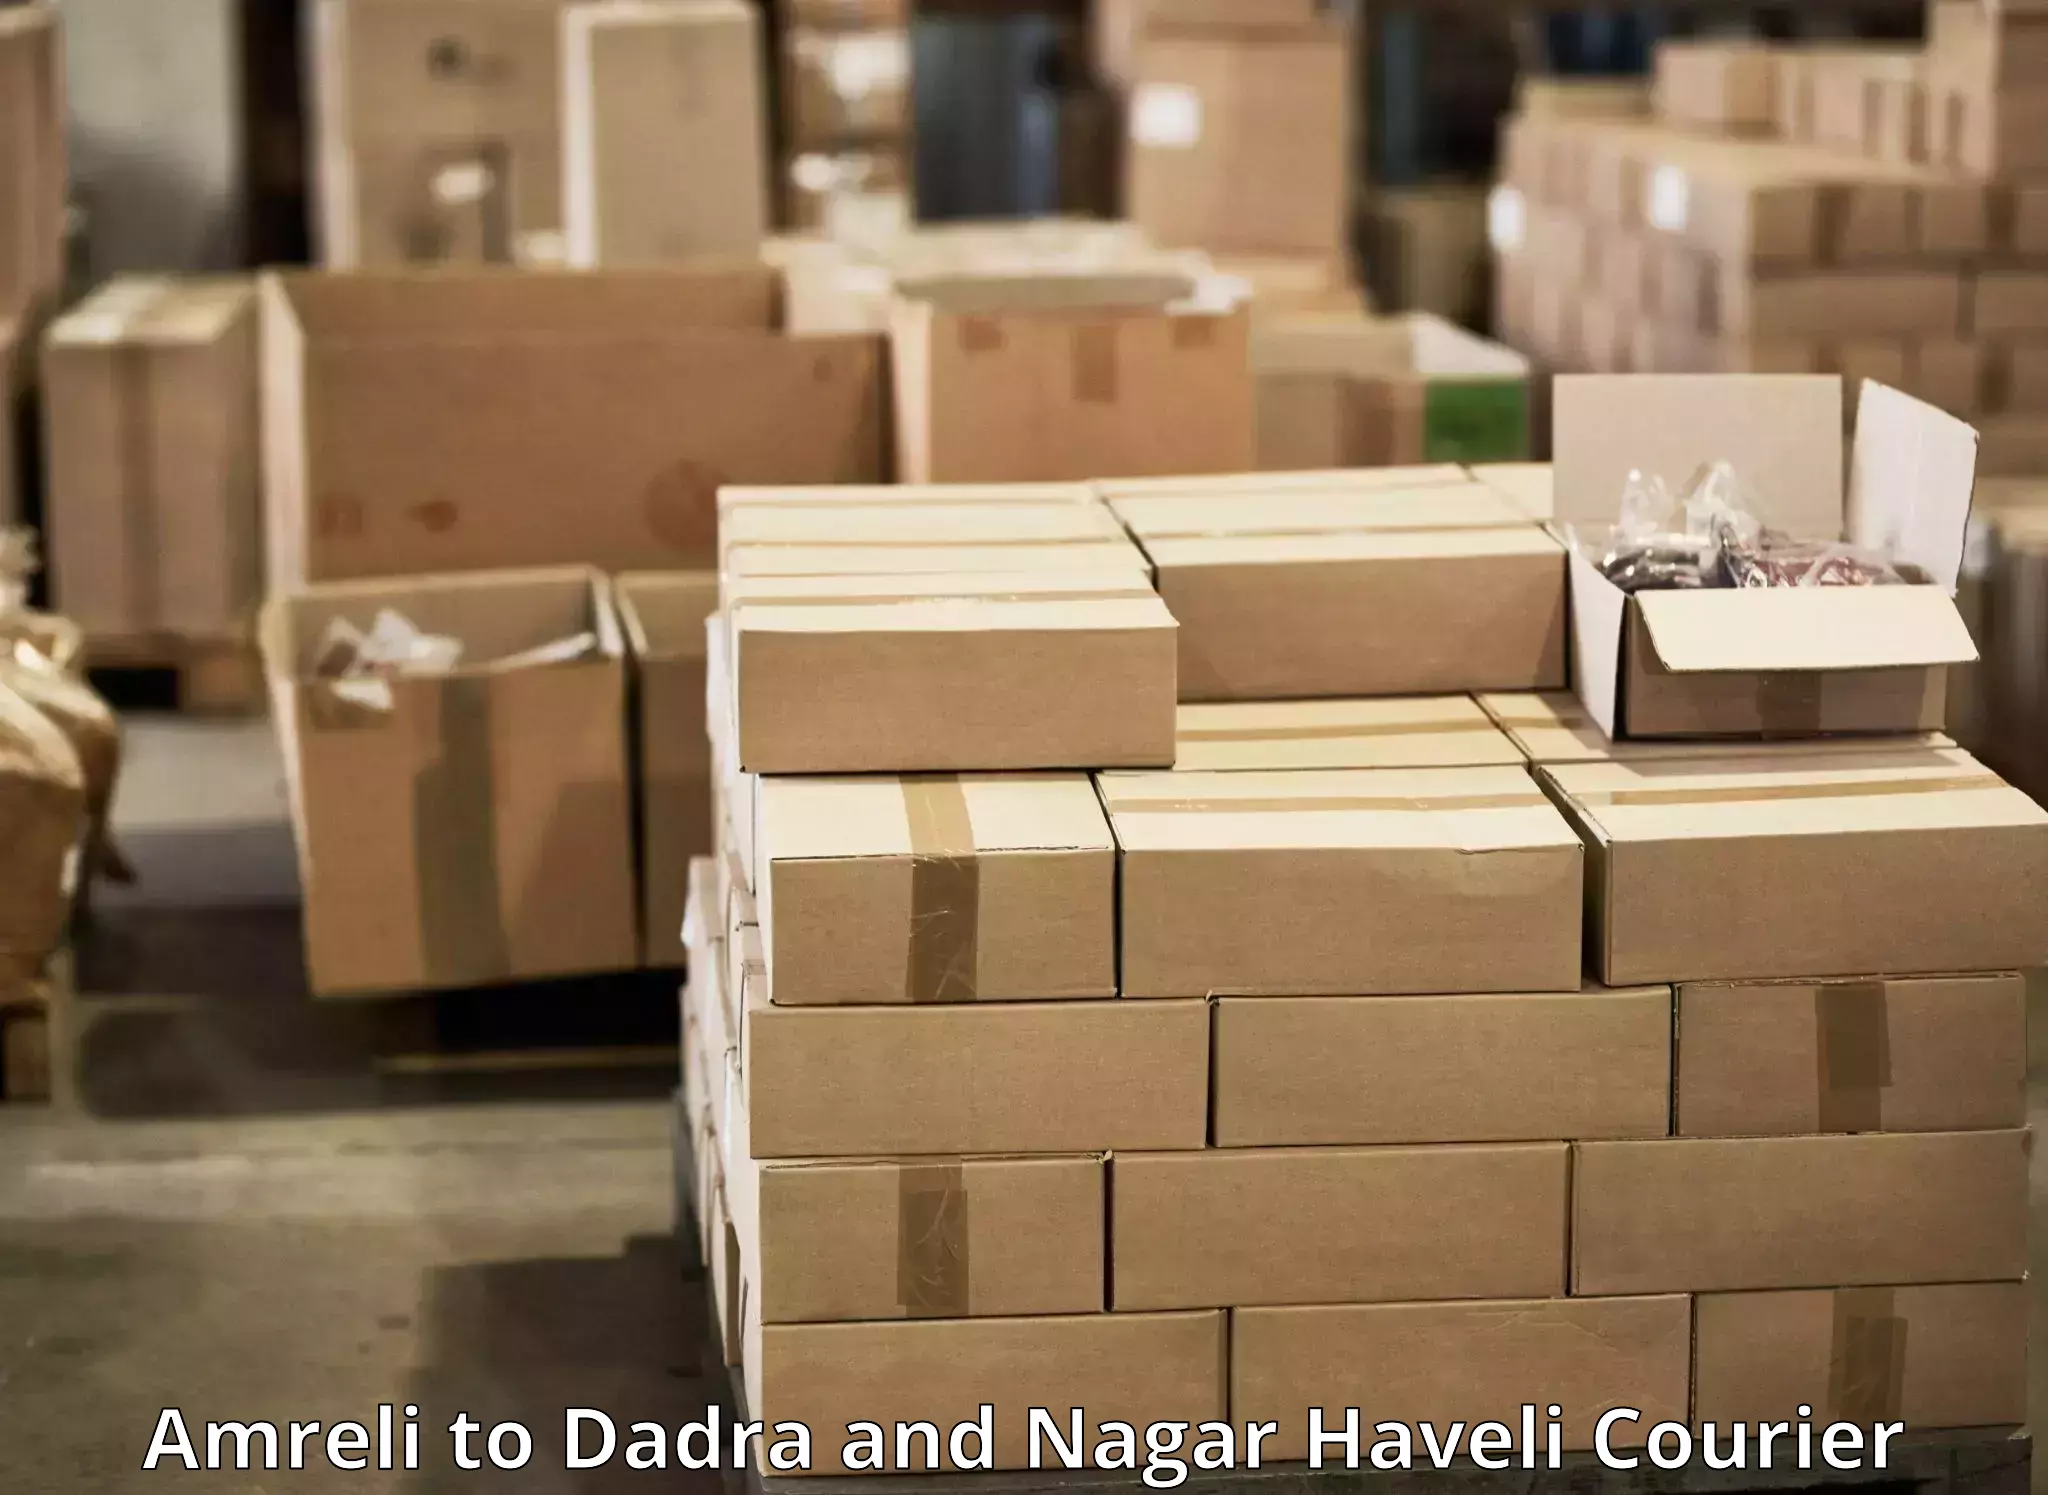 Professional parcel services Amreli to Silvassa